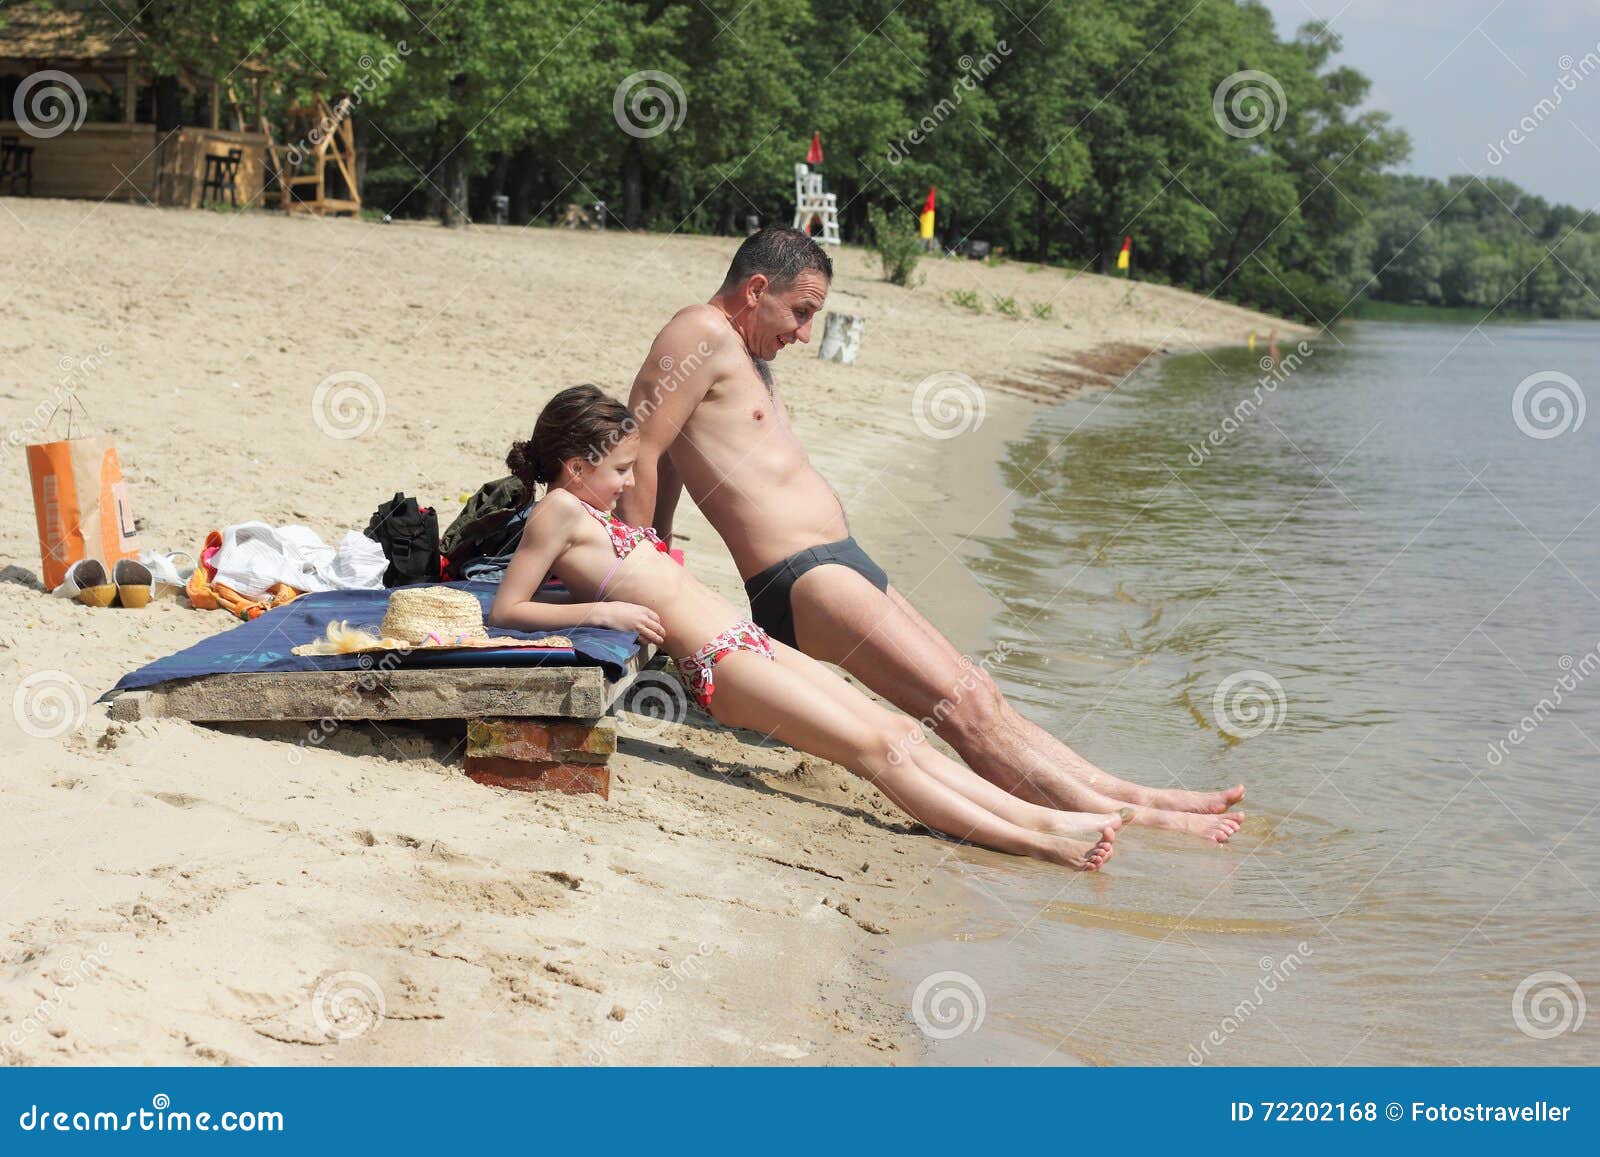 dad daughter nude in beach